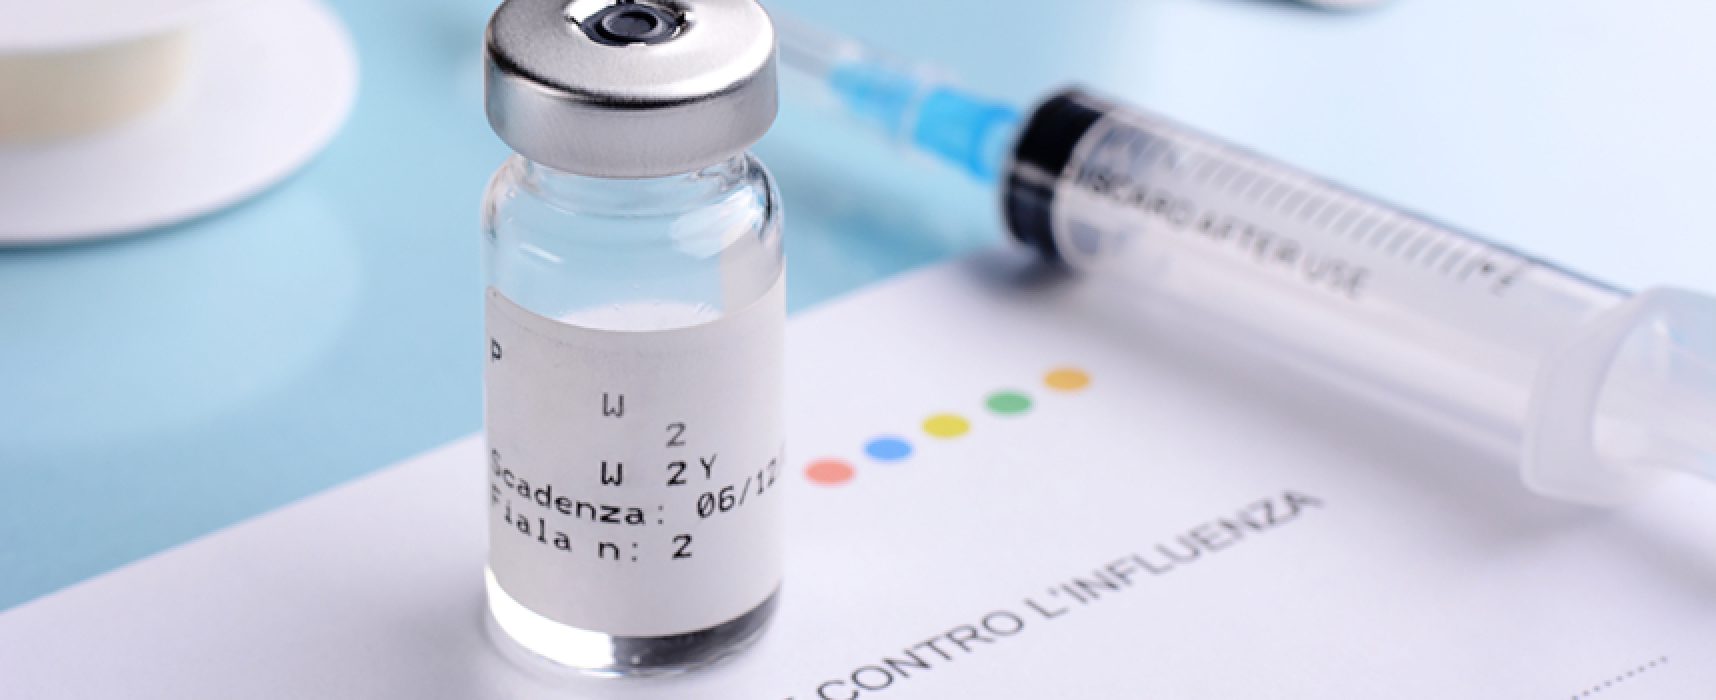 Asl Bat: “Vaccino antinfluenzale già disponibile” / A chi è raccomandato